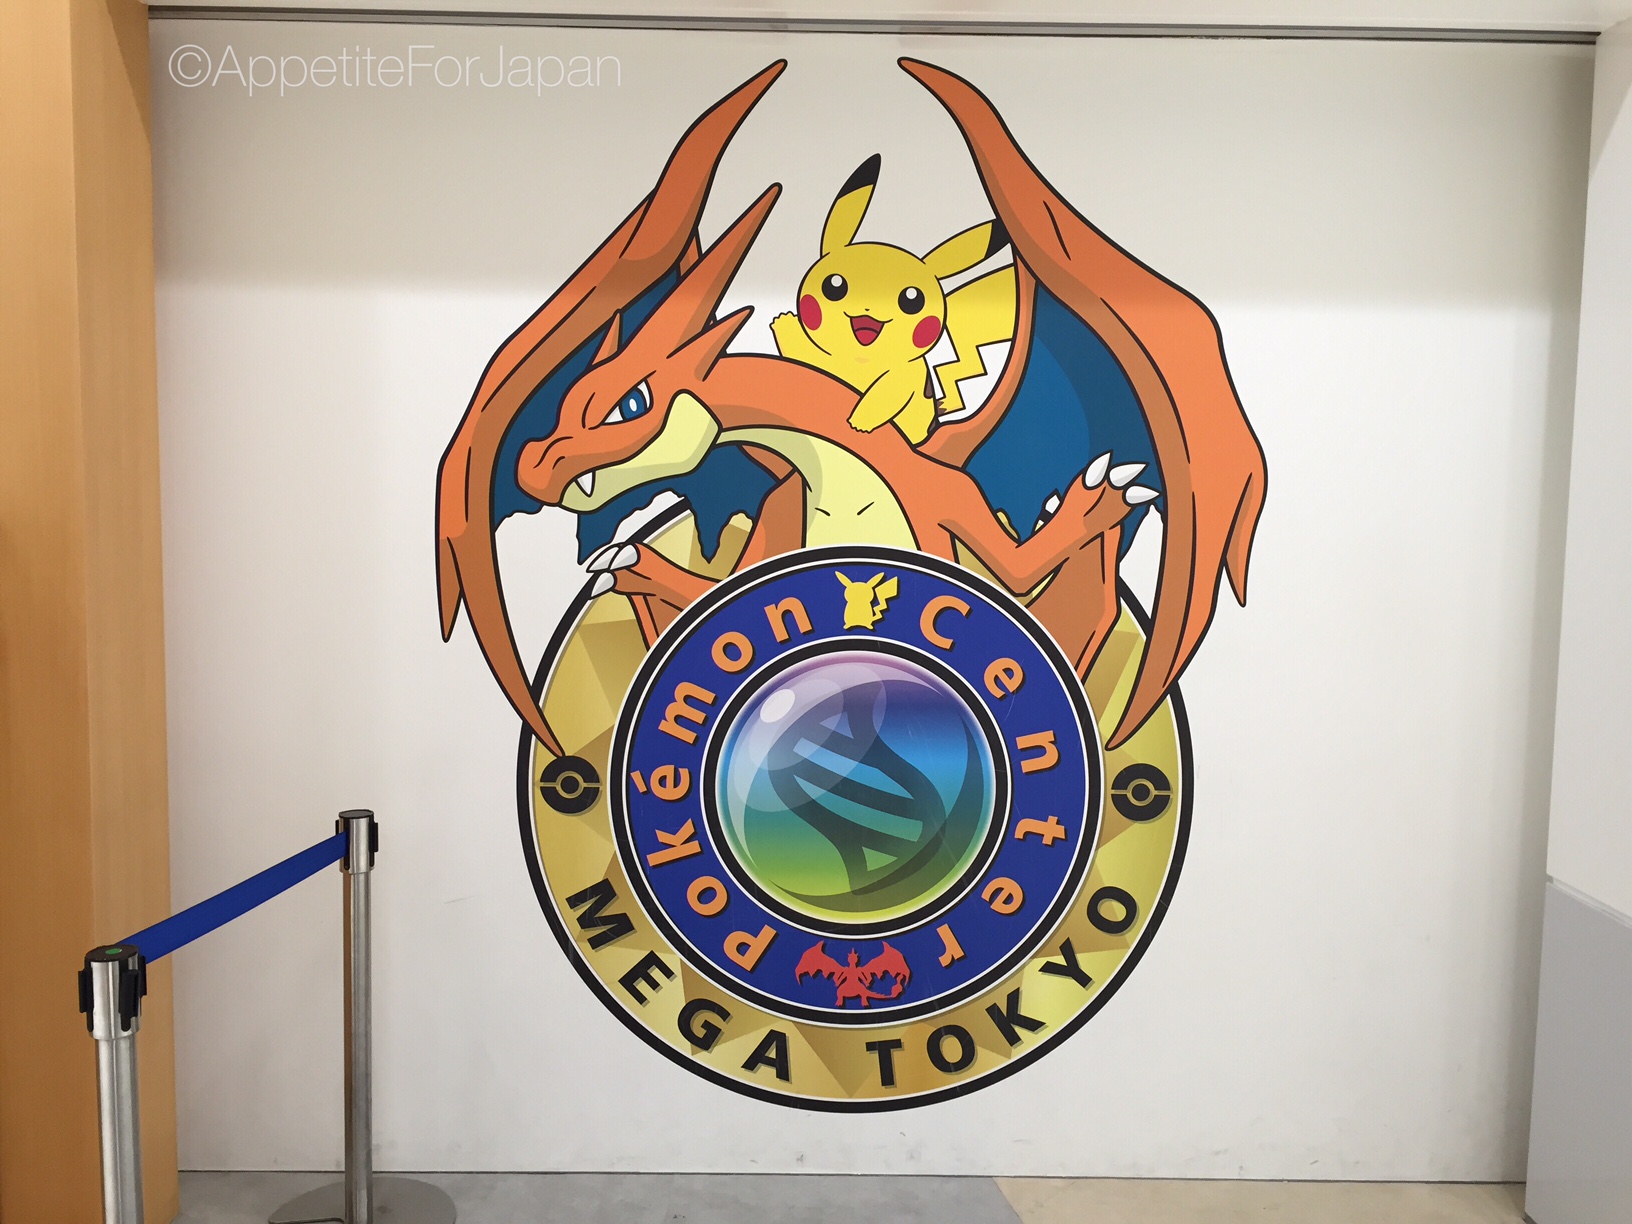 Shiny Pikachu (Pokemon Center Mega Tokyo) - PokemonGet - Ottieni